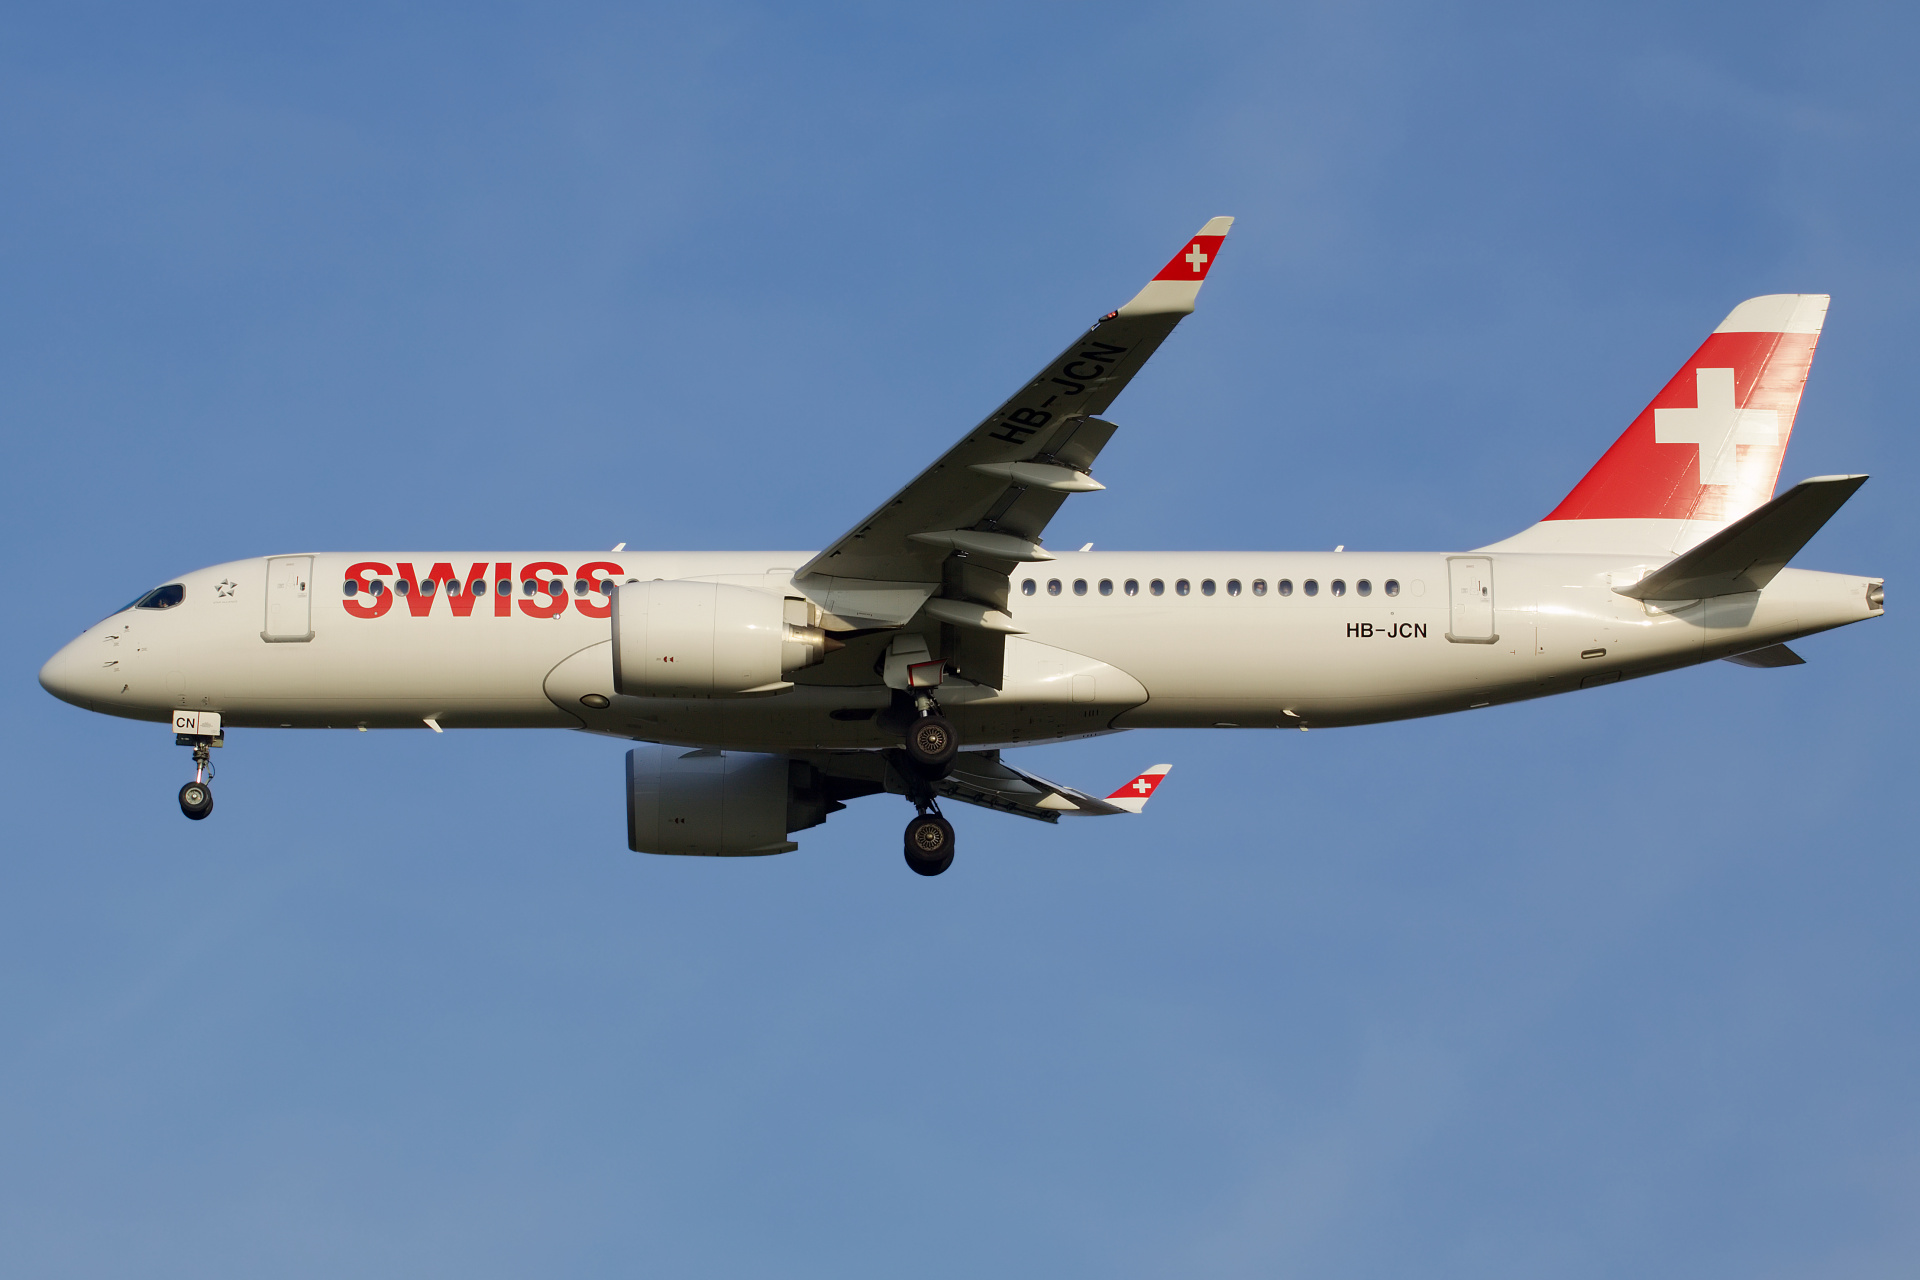 HB-JCN (Aircraft » EPWA Spotting » Airbus A220-300 » Swiss International Air Lines)